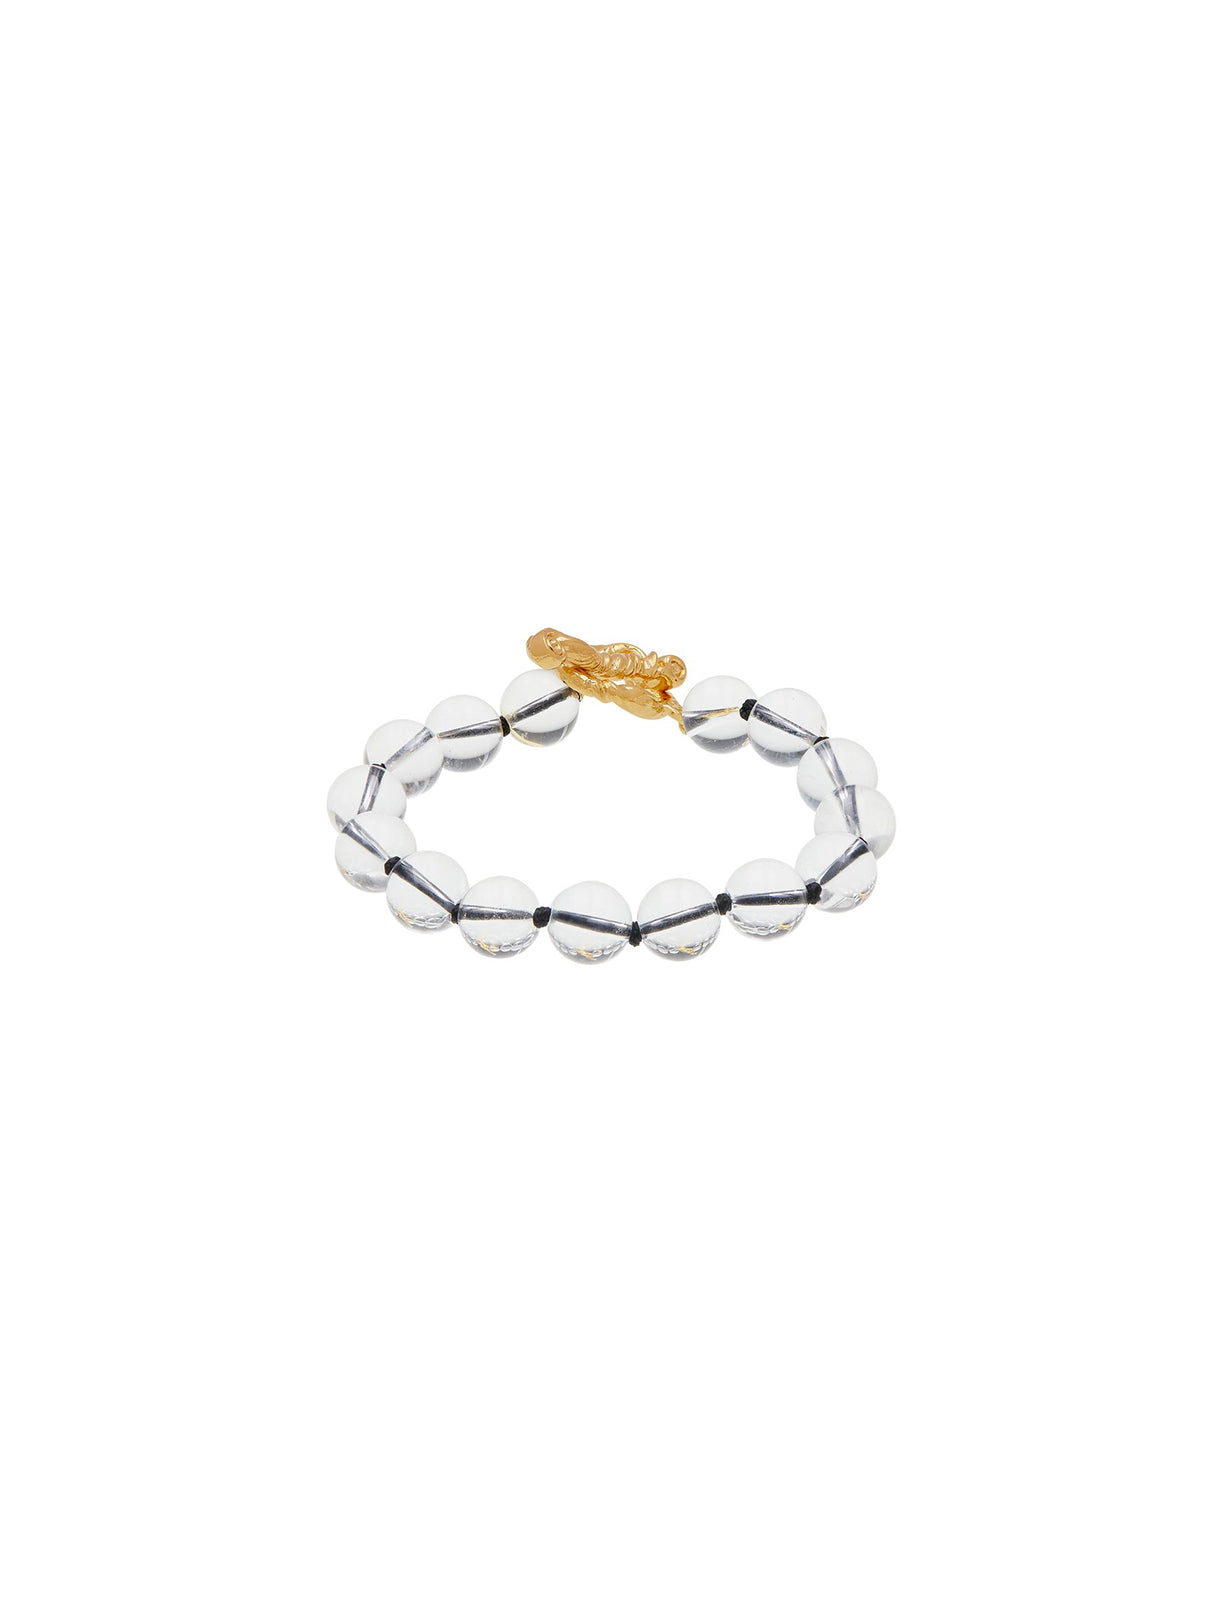 Buy wholesale The sanaa bracelet